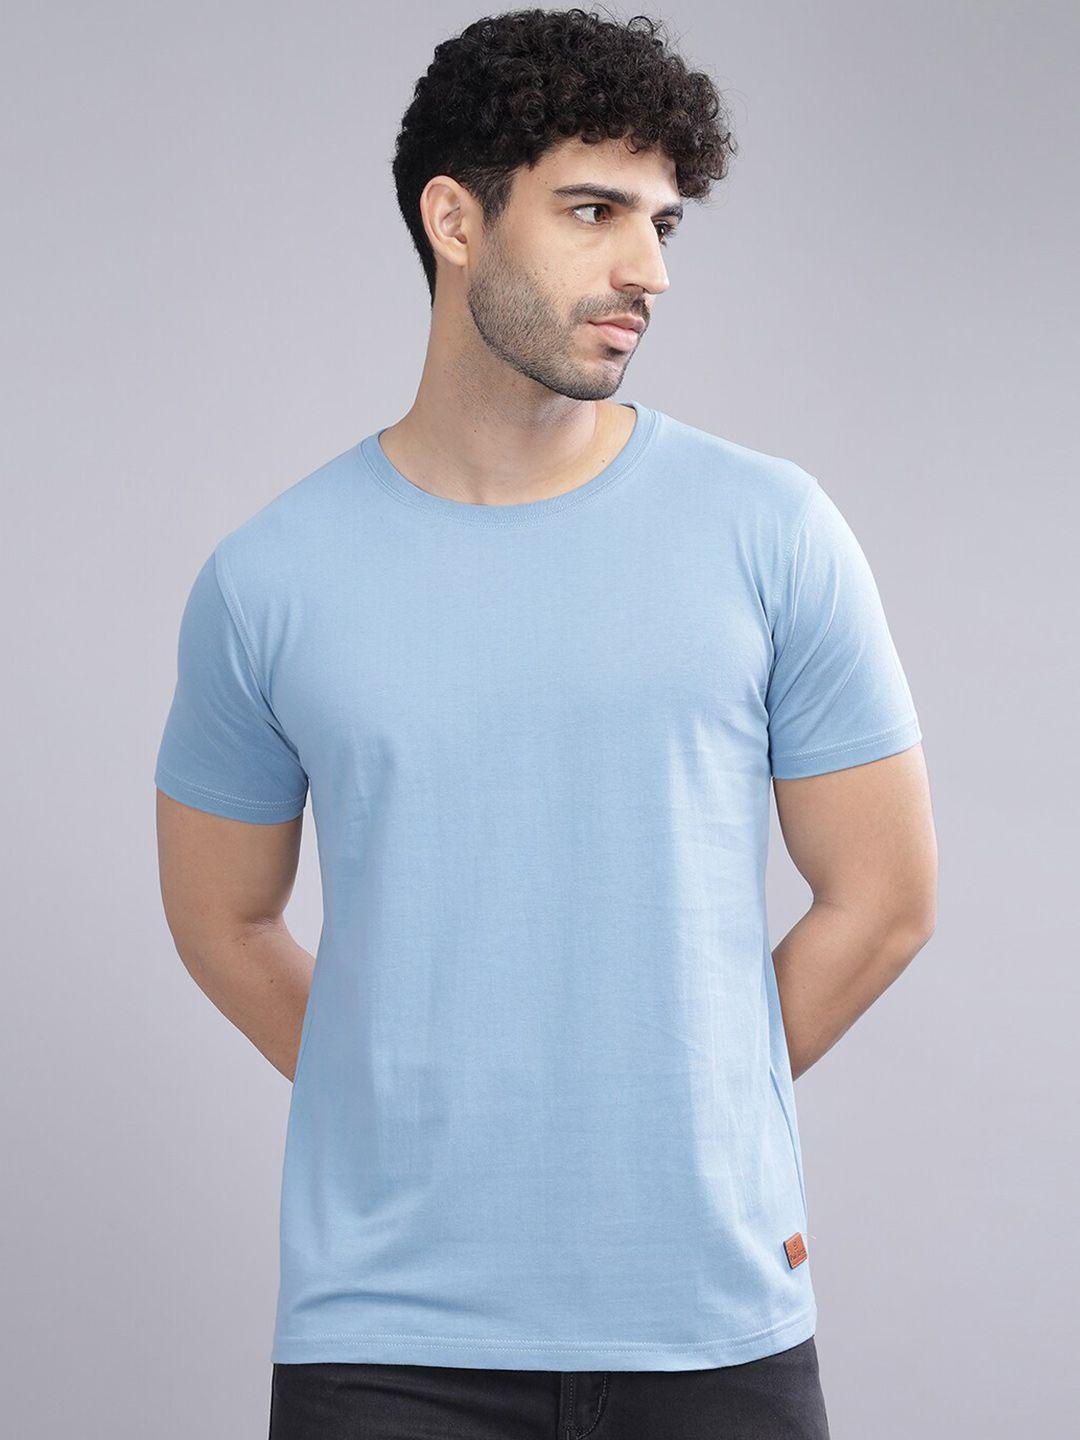 paul-street-round-neck-bio-finish-pure-cotton-slim-fit-t-shirt